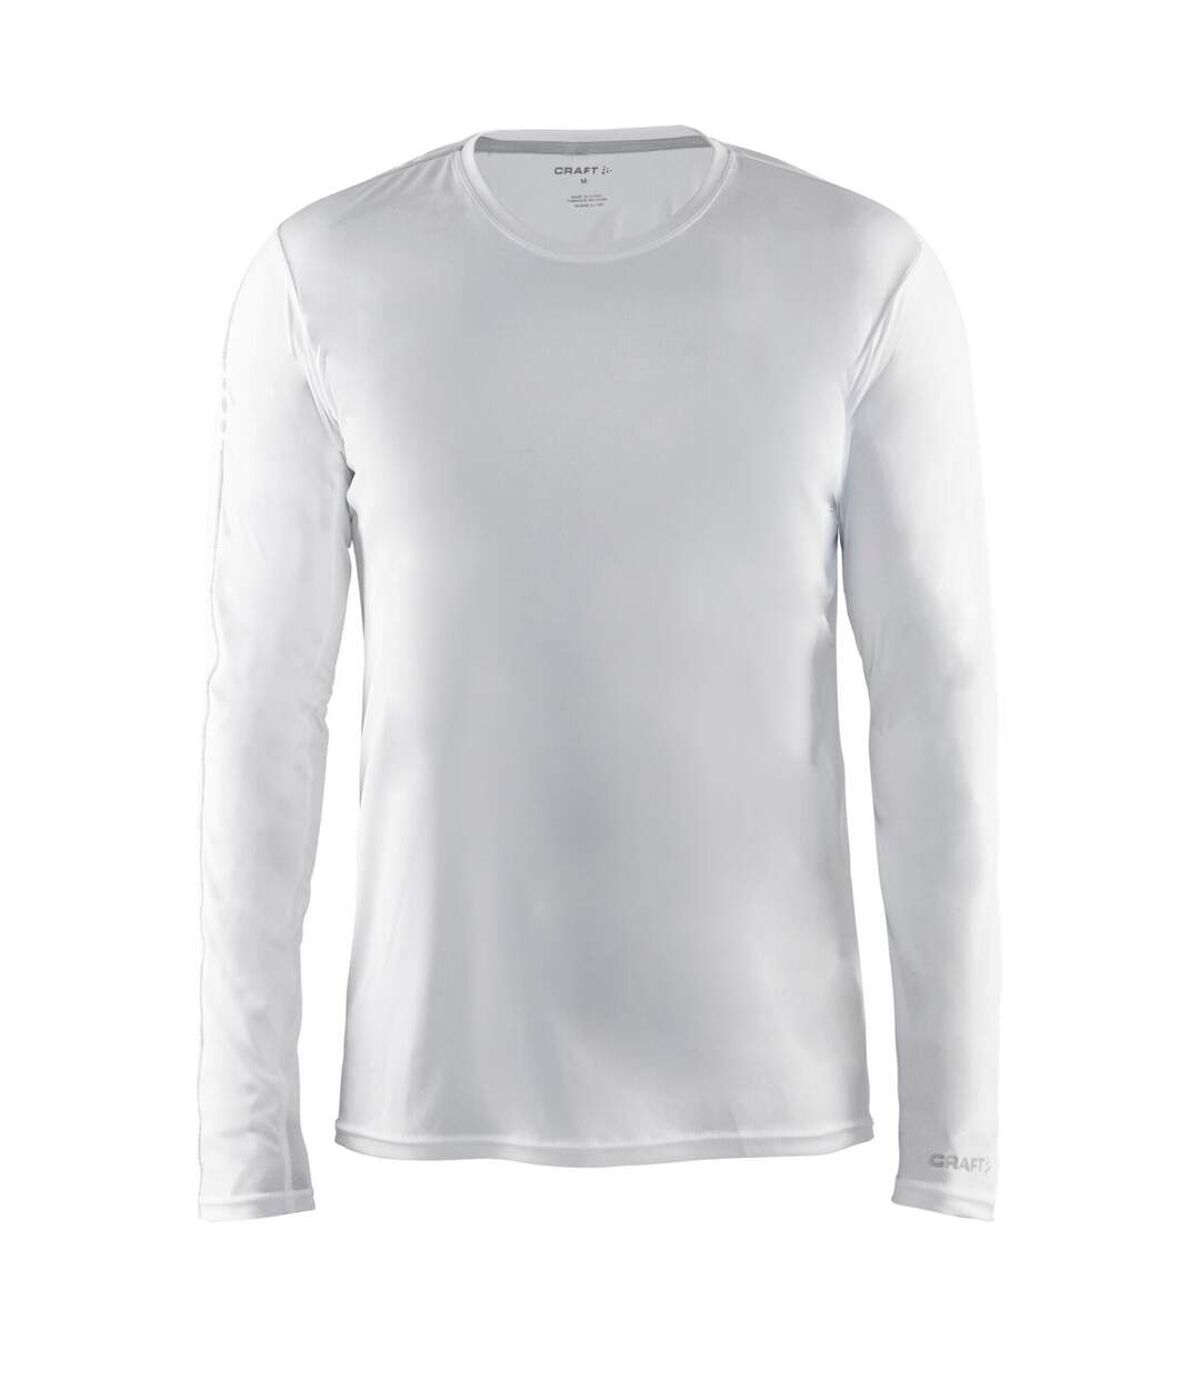 Craft - T-shirt manches longues MIND - Homme (Blanc) - UTRW6154